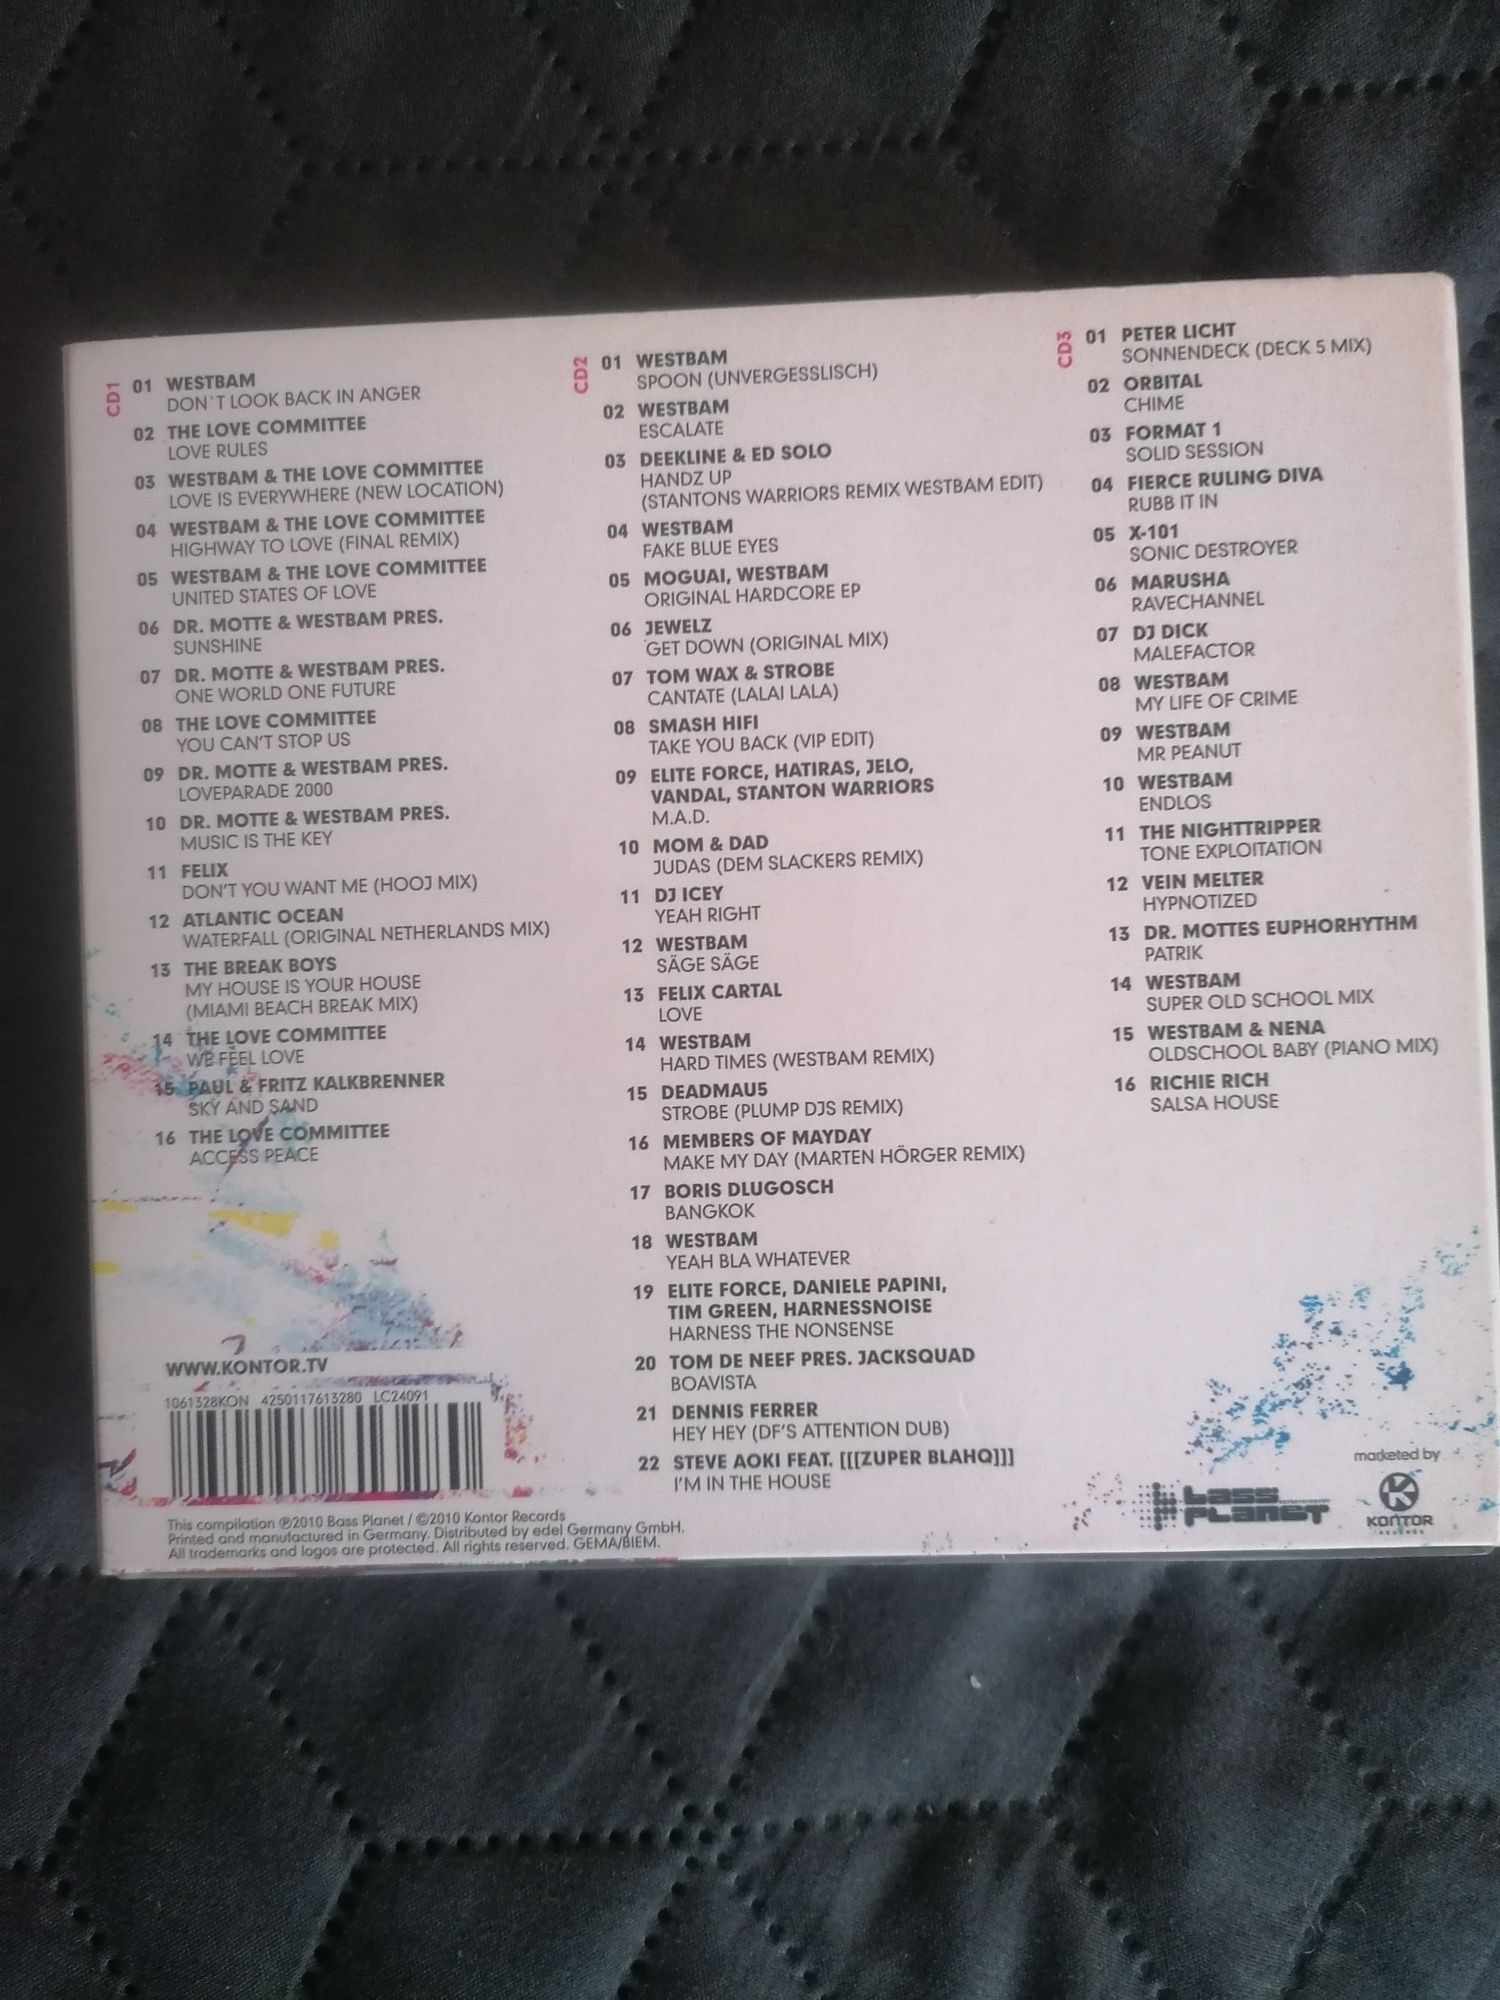 Westbam a love story 89-10 unikat 3 cd